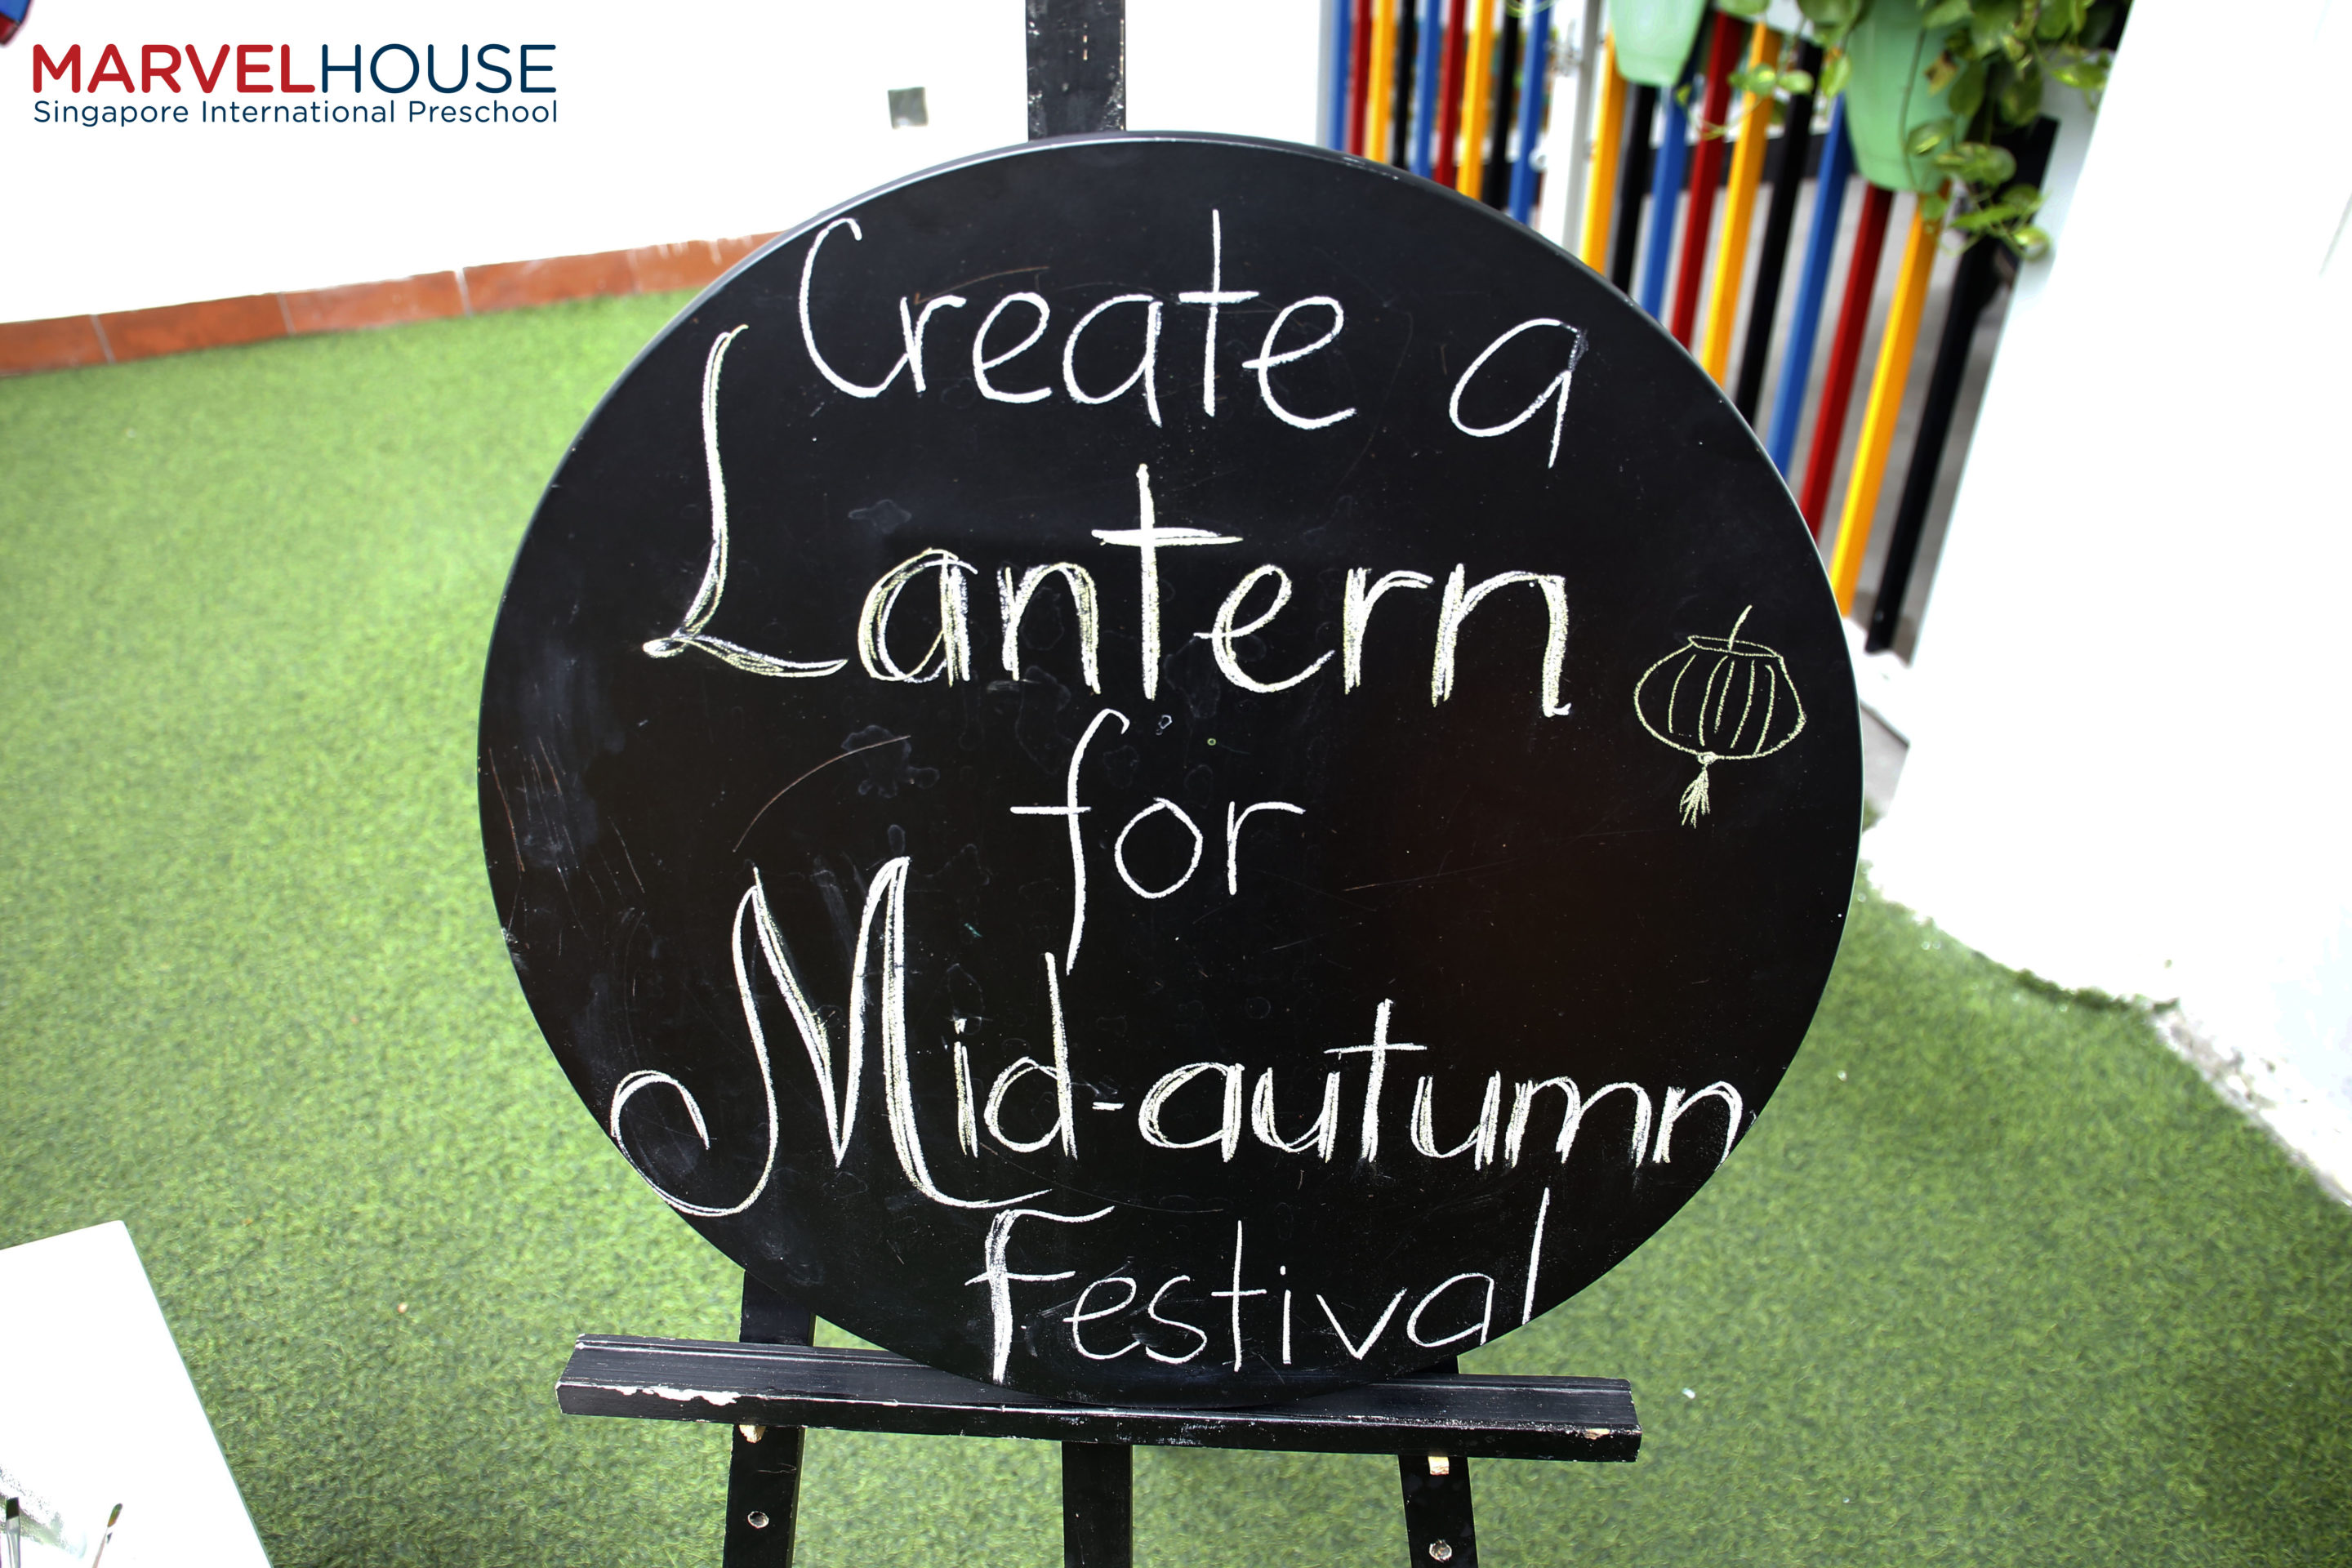 Creat a lantern for Mid-autumn